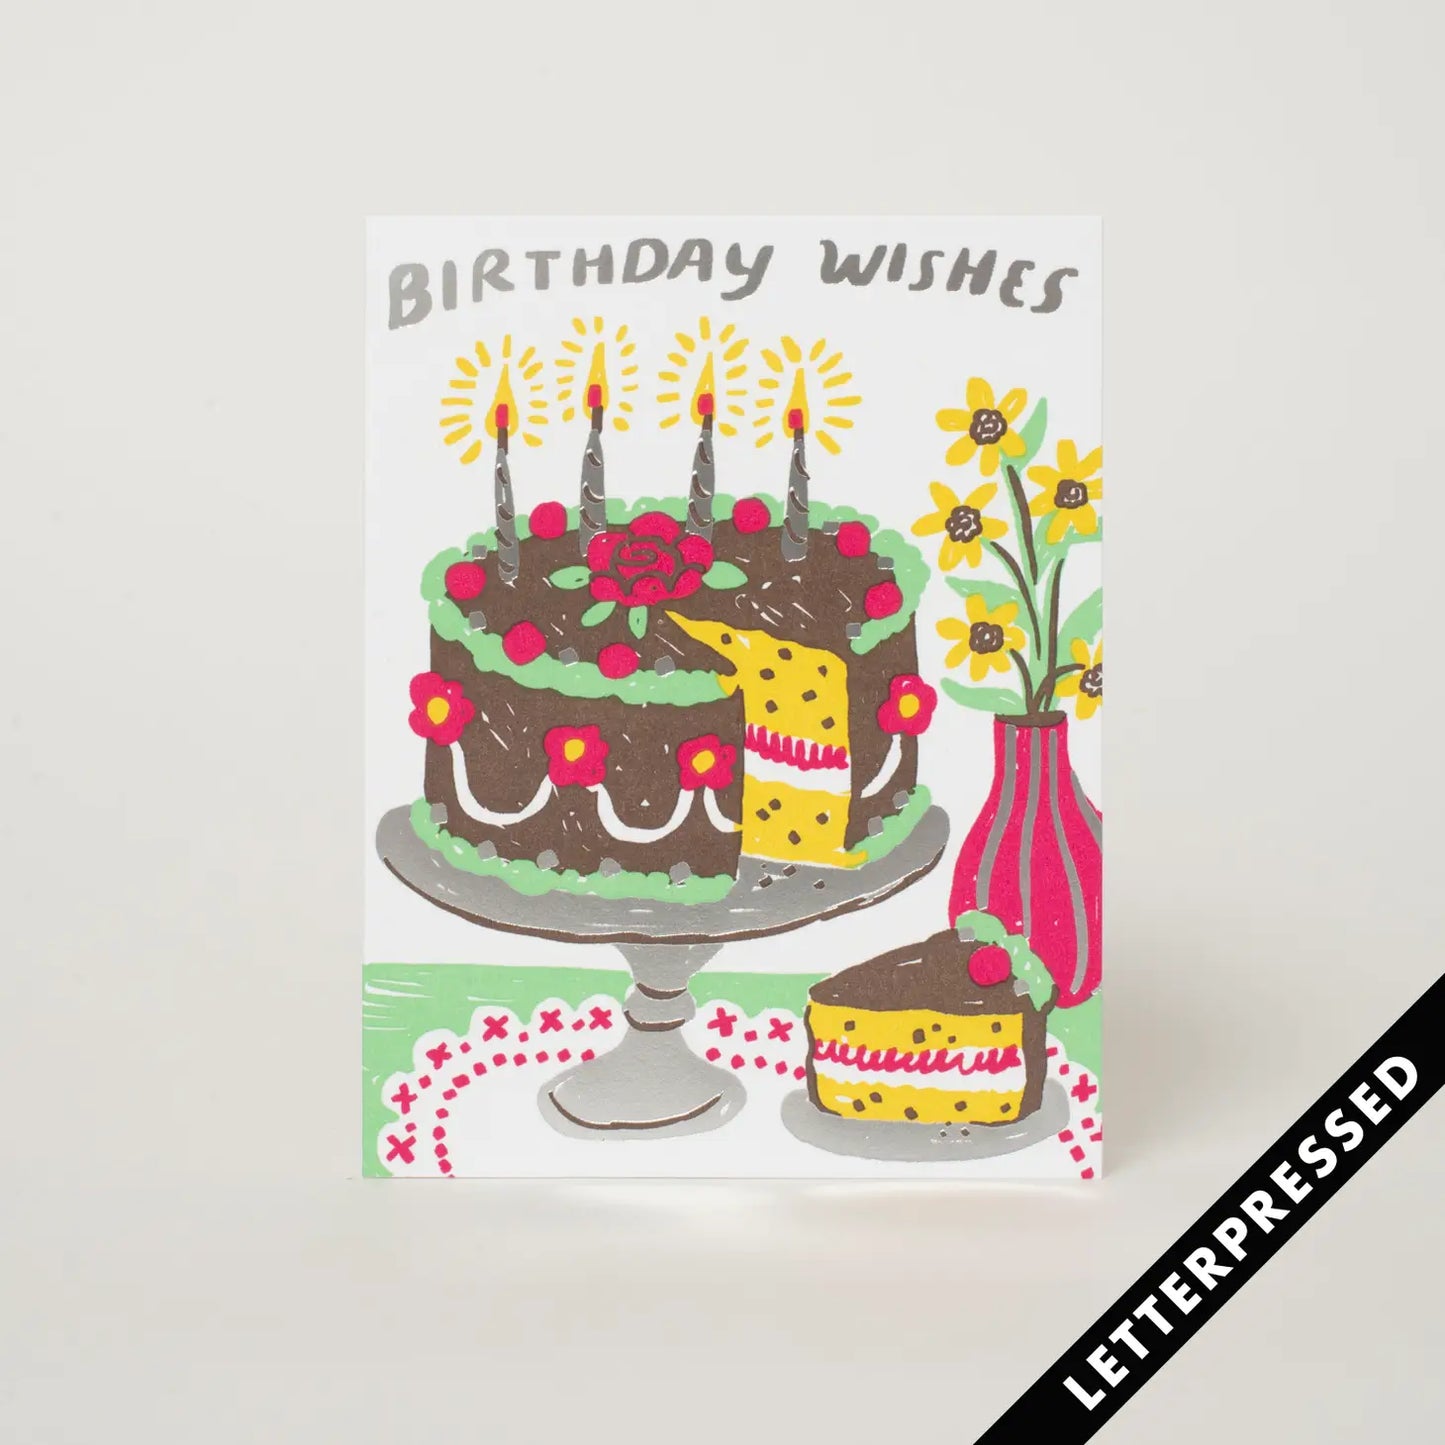 Birthday Cake Wishes Card · Phoebe Wahl & Egg Press